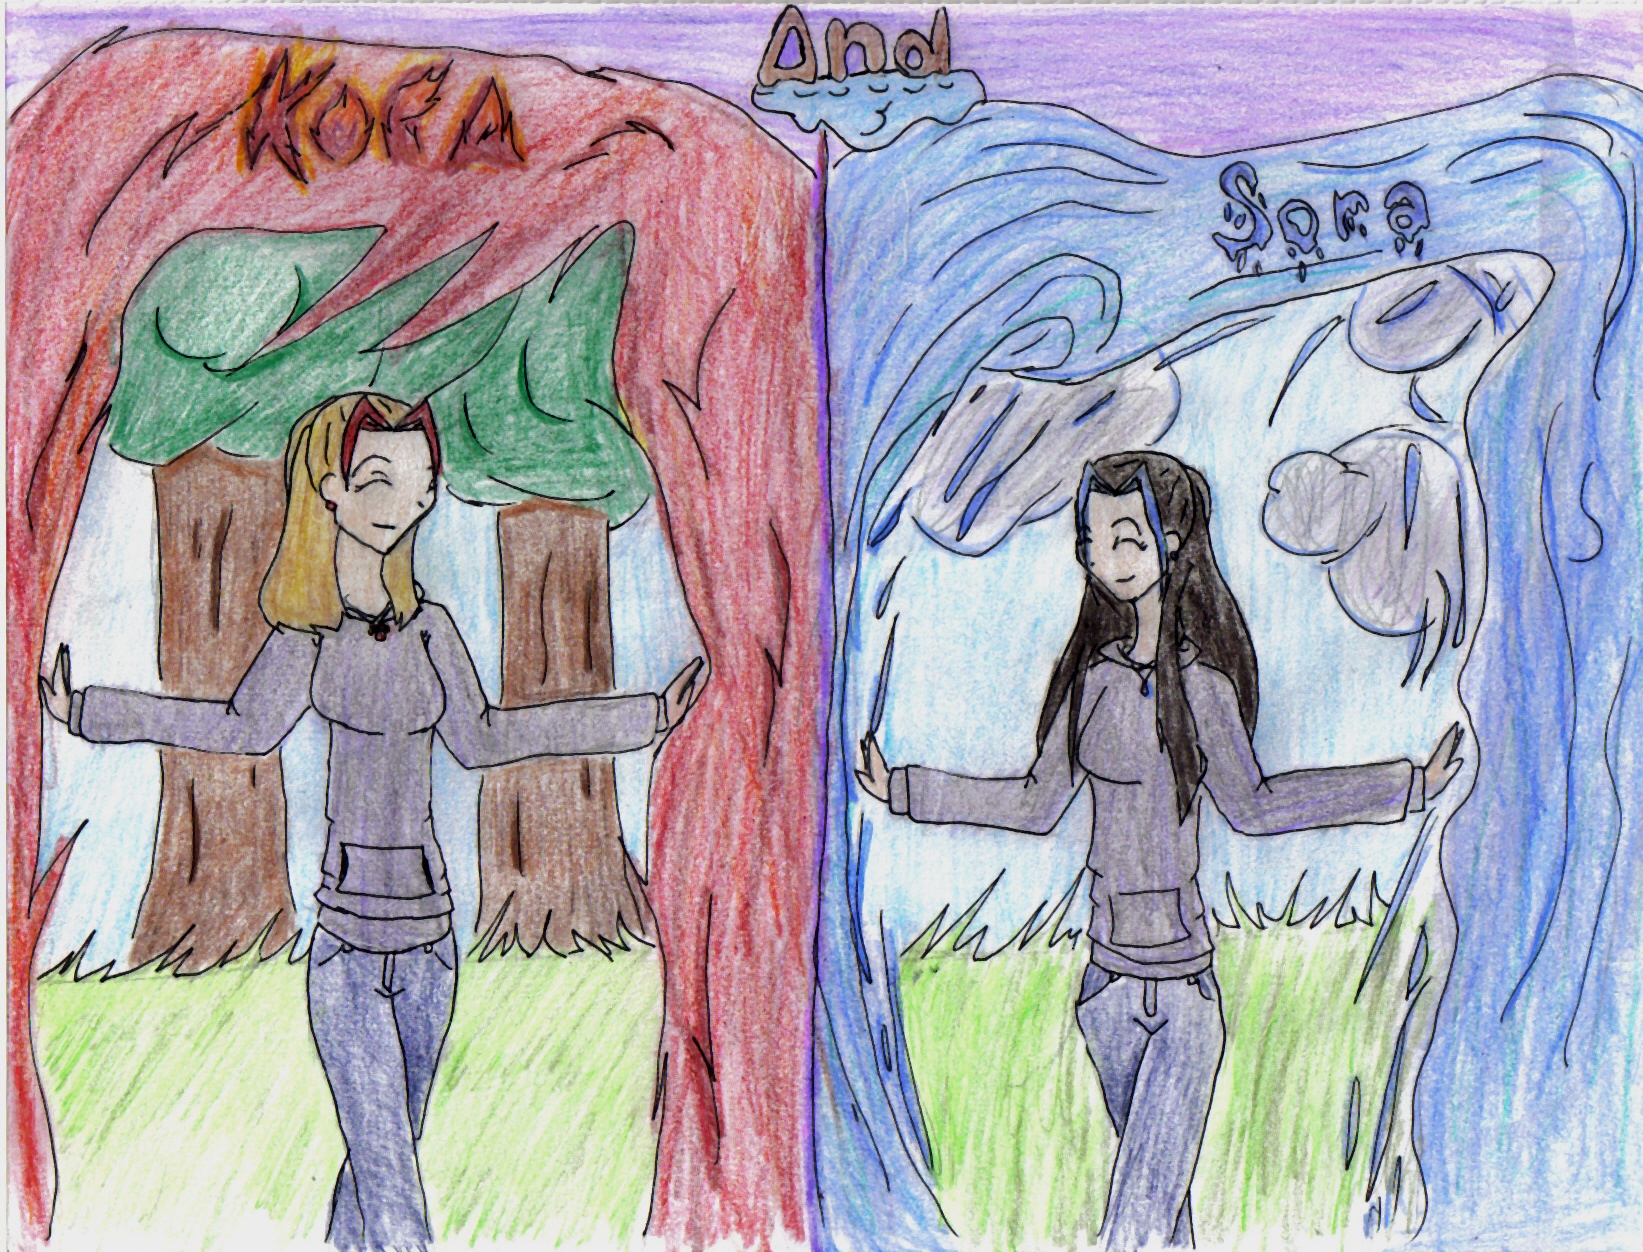 Kora And Sora by Sora_and_Kora